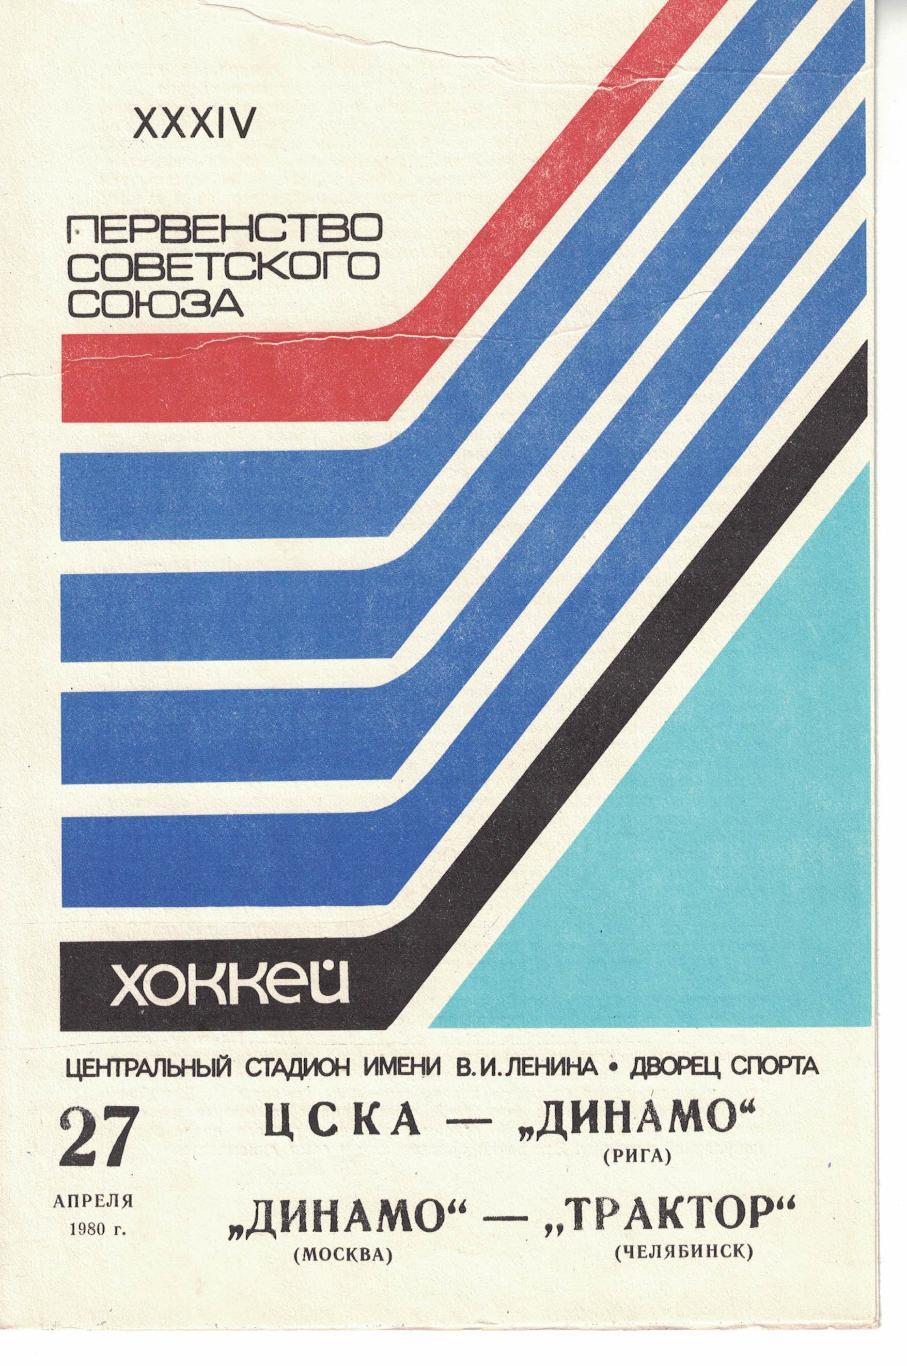 ЦСКА - Динамо Рига, Динамо Москва - Трактор 27.04.1980. Чемпионат СССР